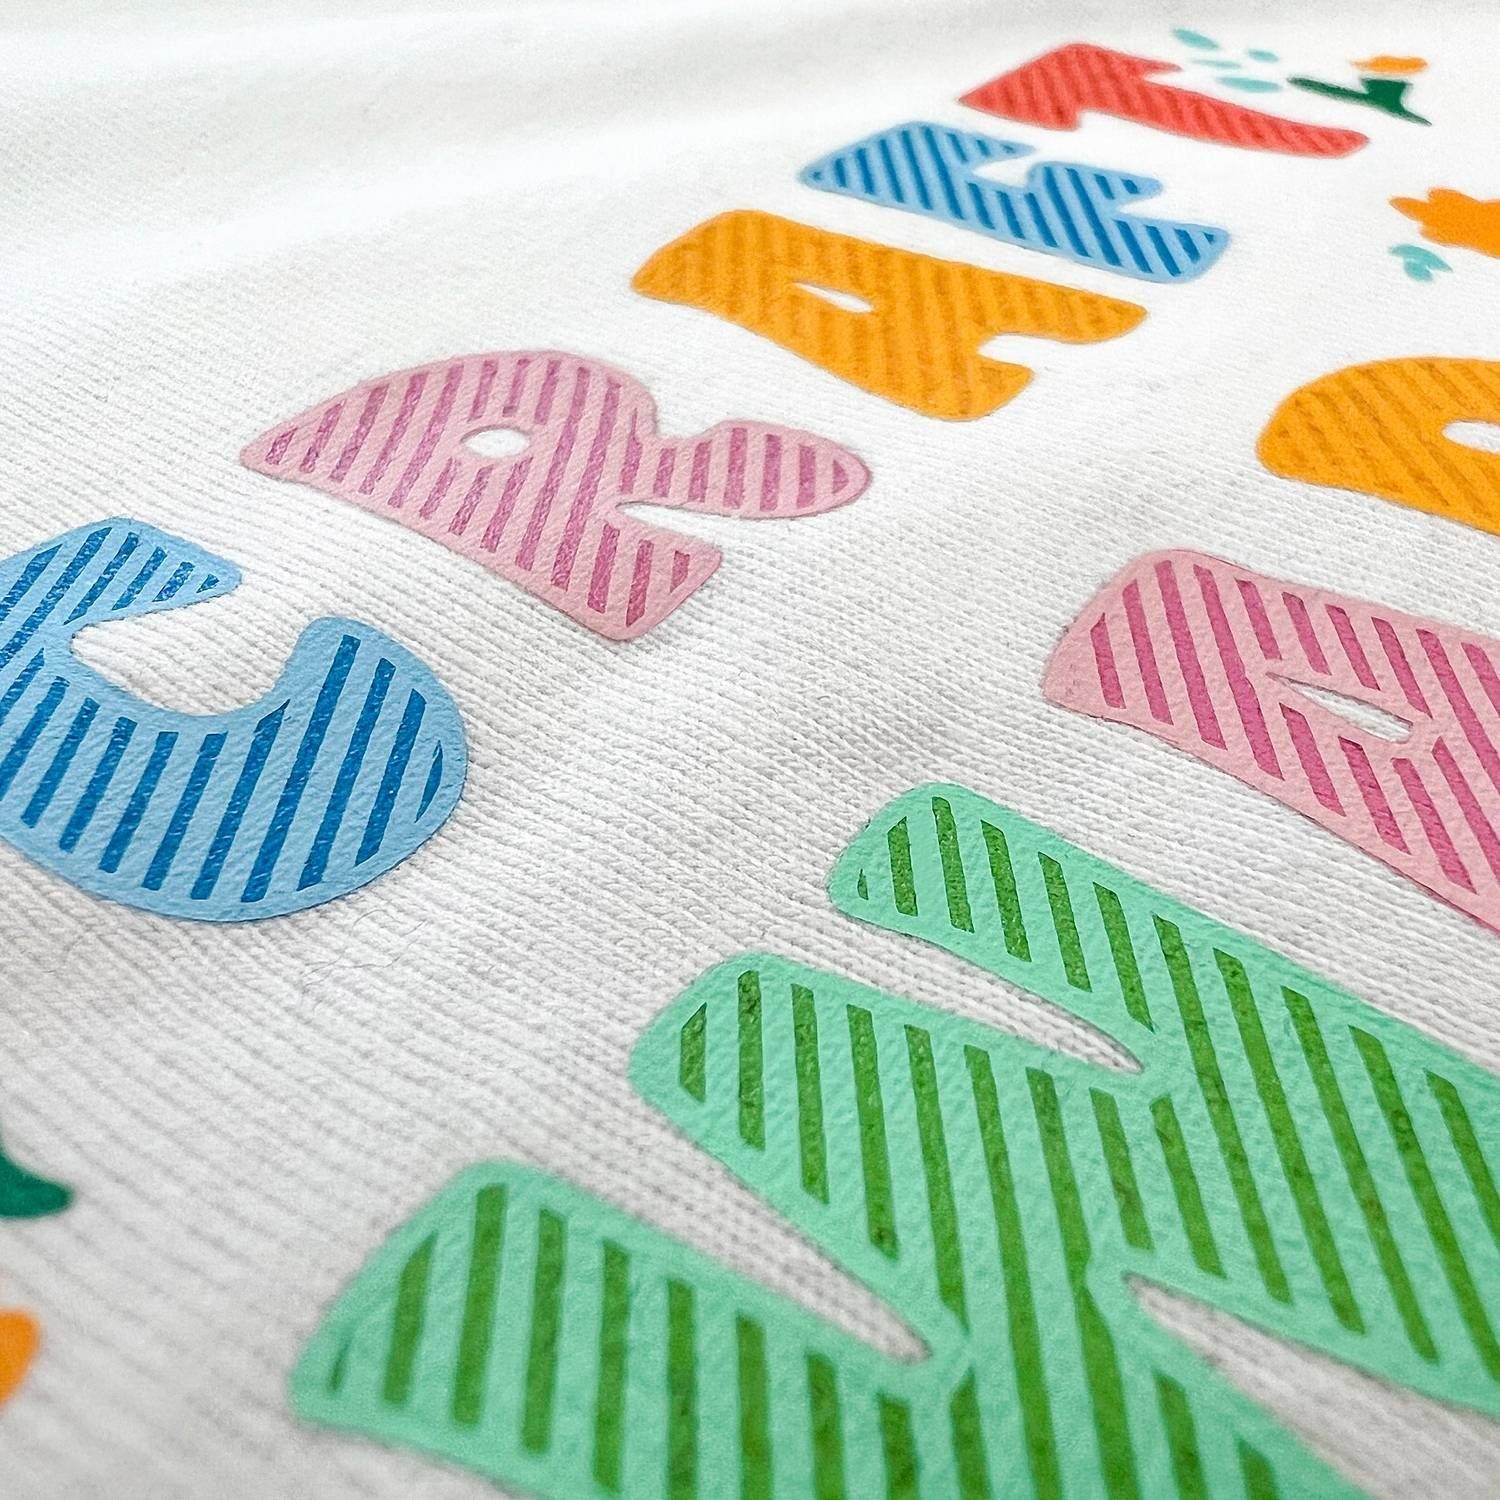 Transparentpapier Hilltop Colors x Textilien A4 zum Fresh Aufbügeln auf 22 Textilfolie Transferfolie,